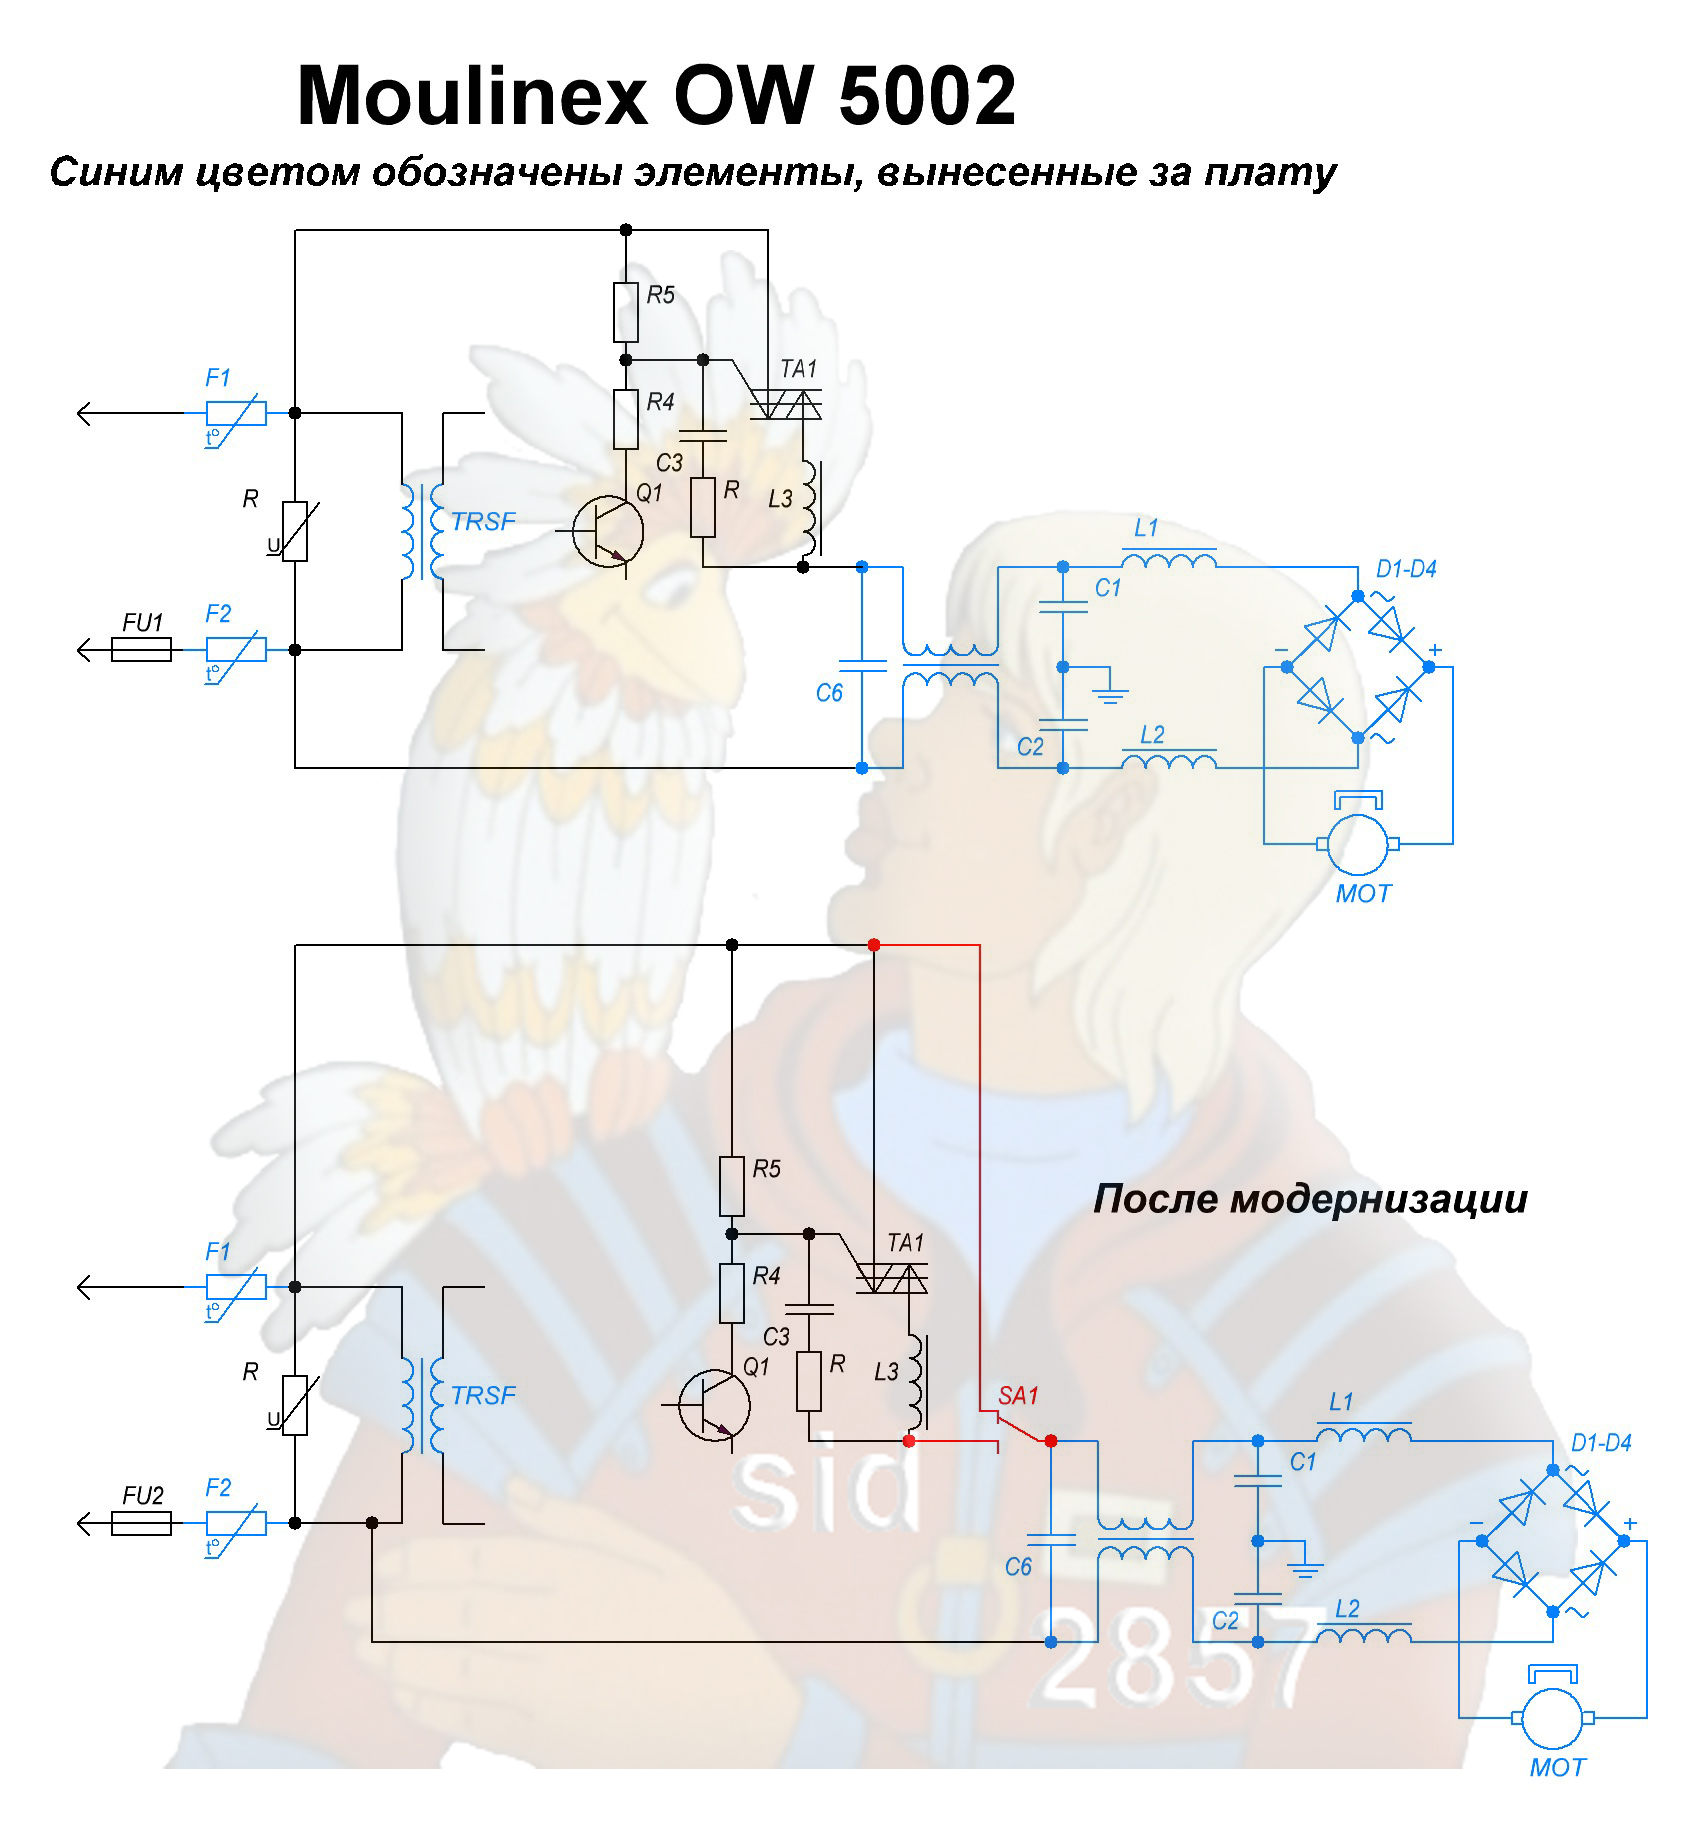 תיקון כיבוי מנוע HP Moulinex 5002